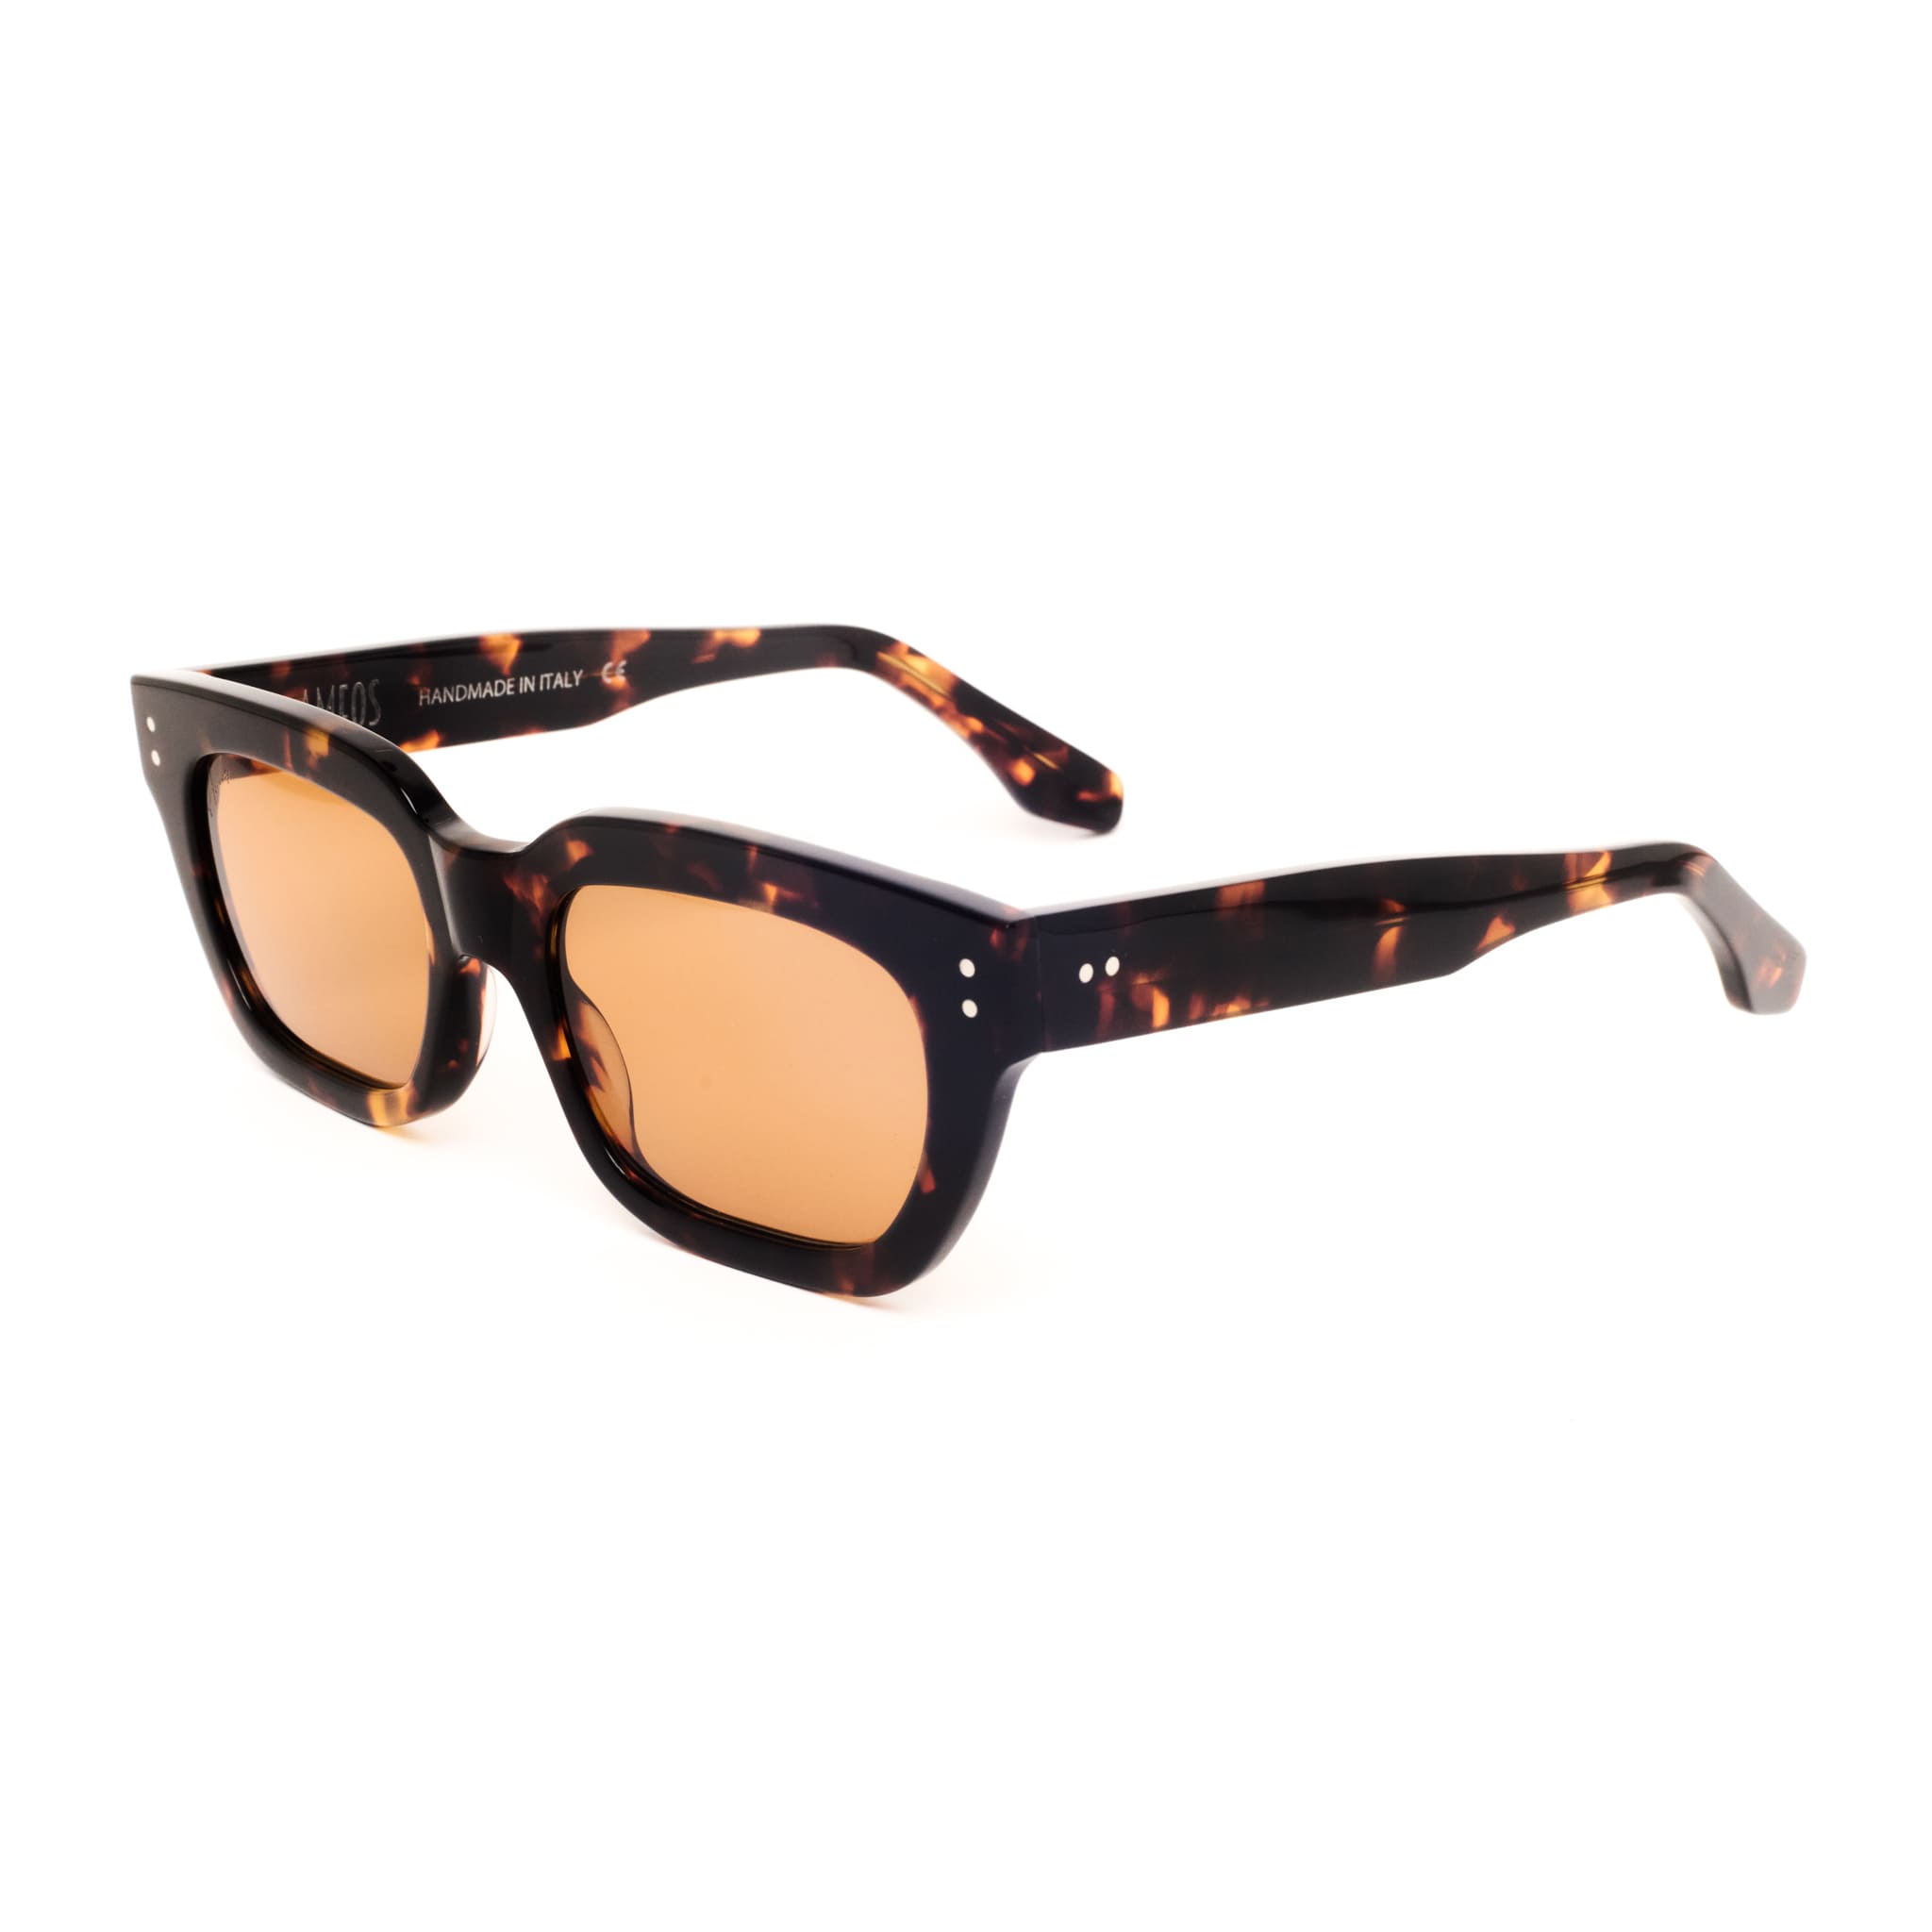 Ameos Forever collection Rae model. Tortoise frames with dark orange lenses. Side view. Genderless, gender neutral eyewear